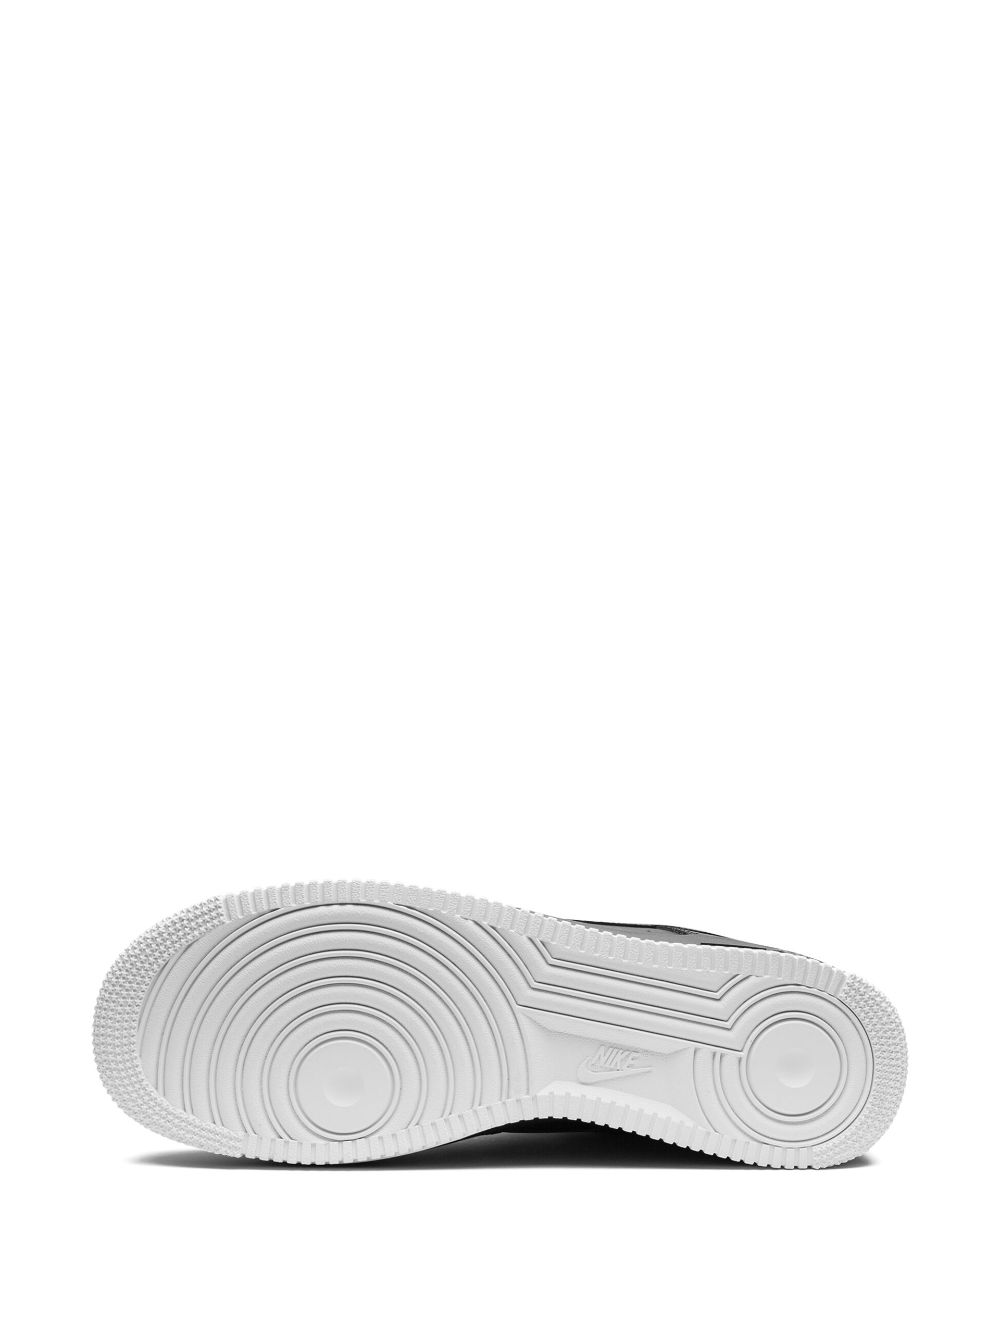 Nike Air Force 1 '07 Black/White Sole Sneakers - Farfetch